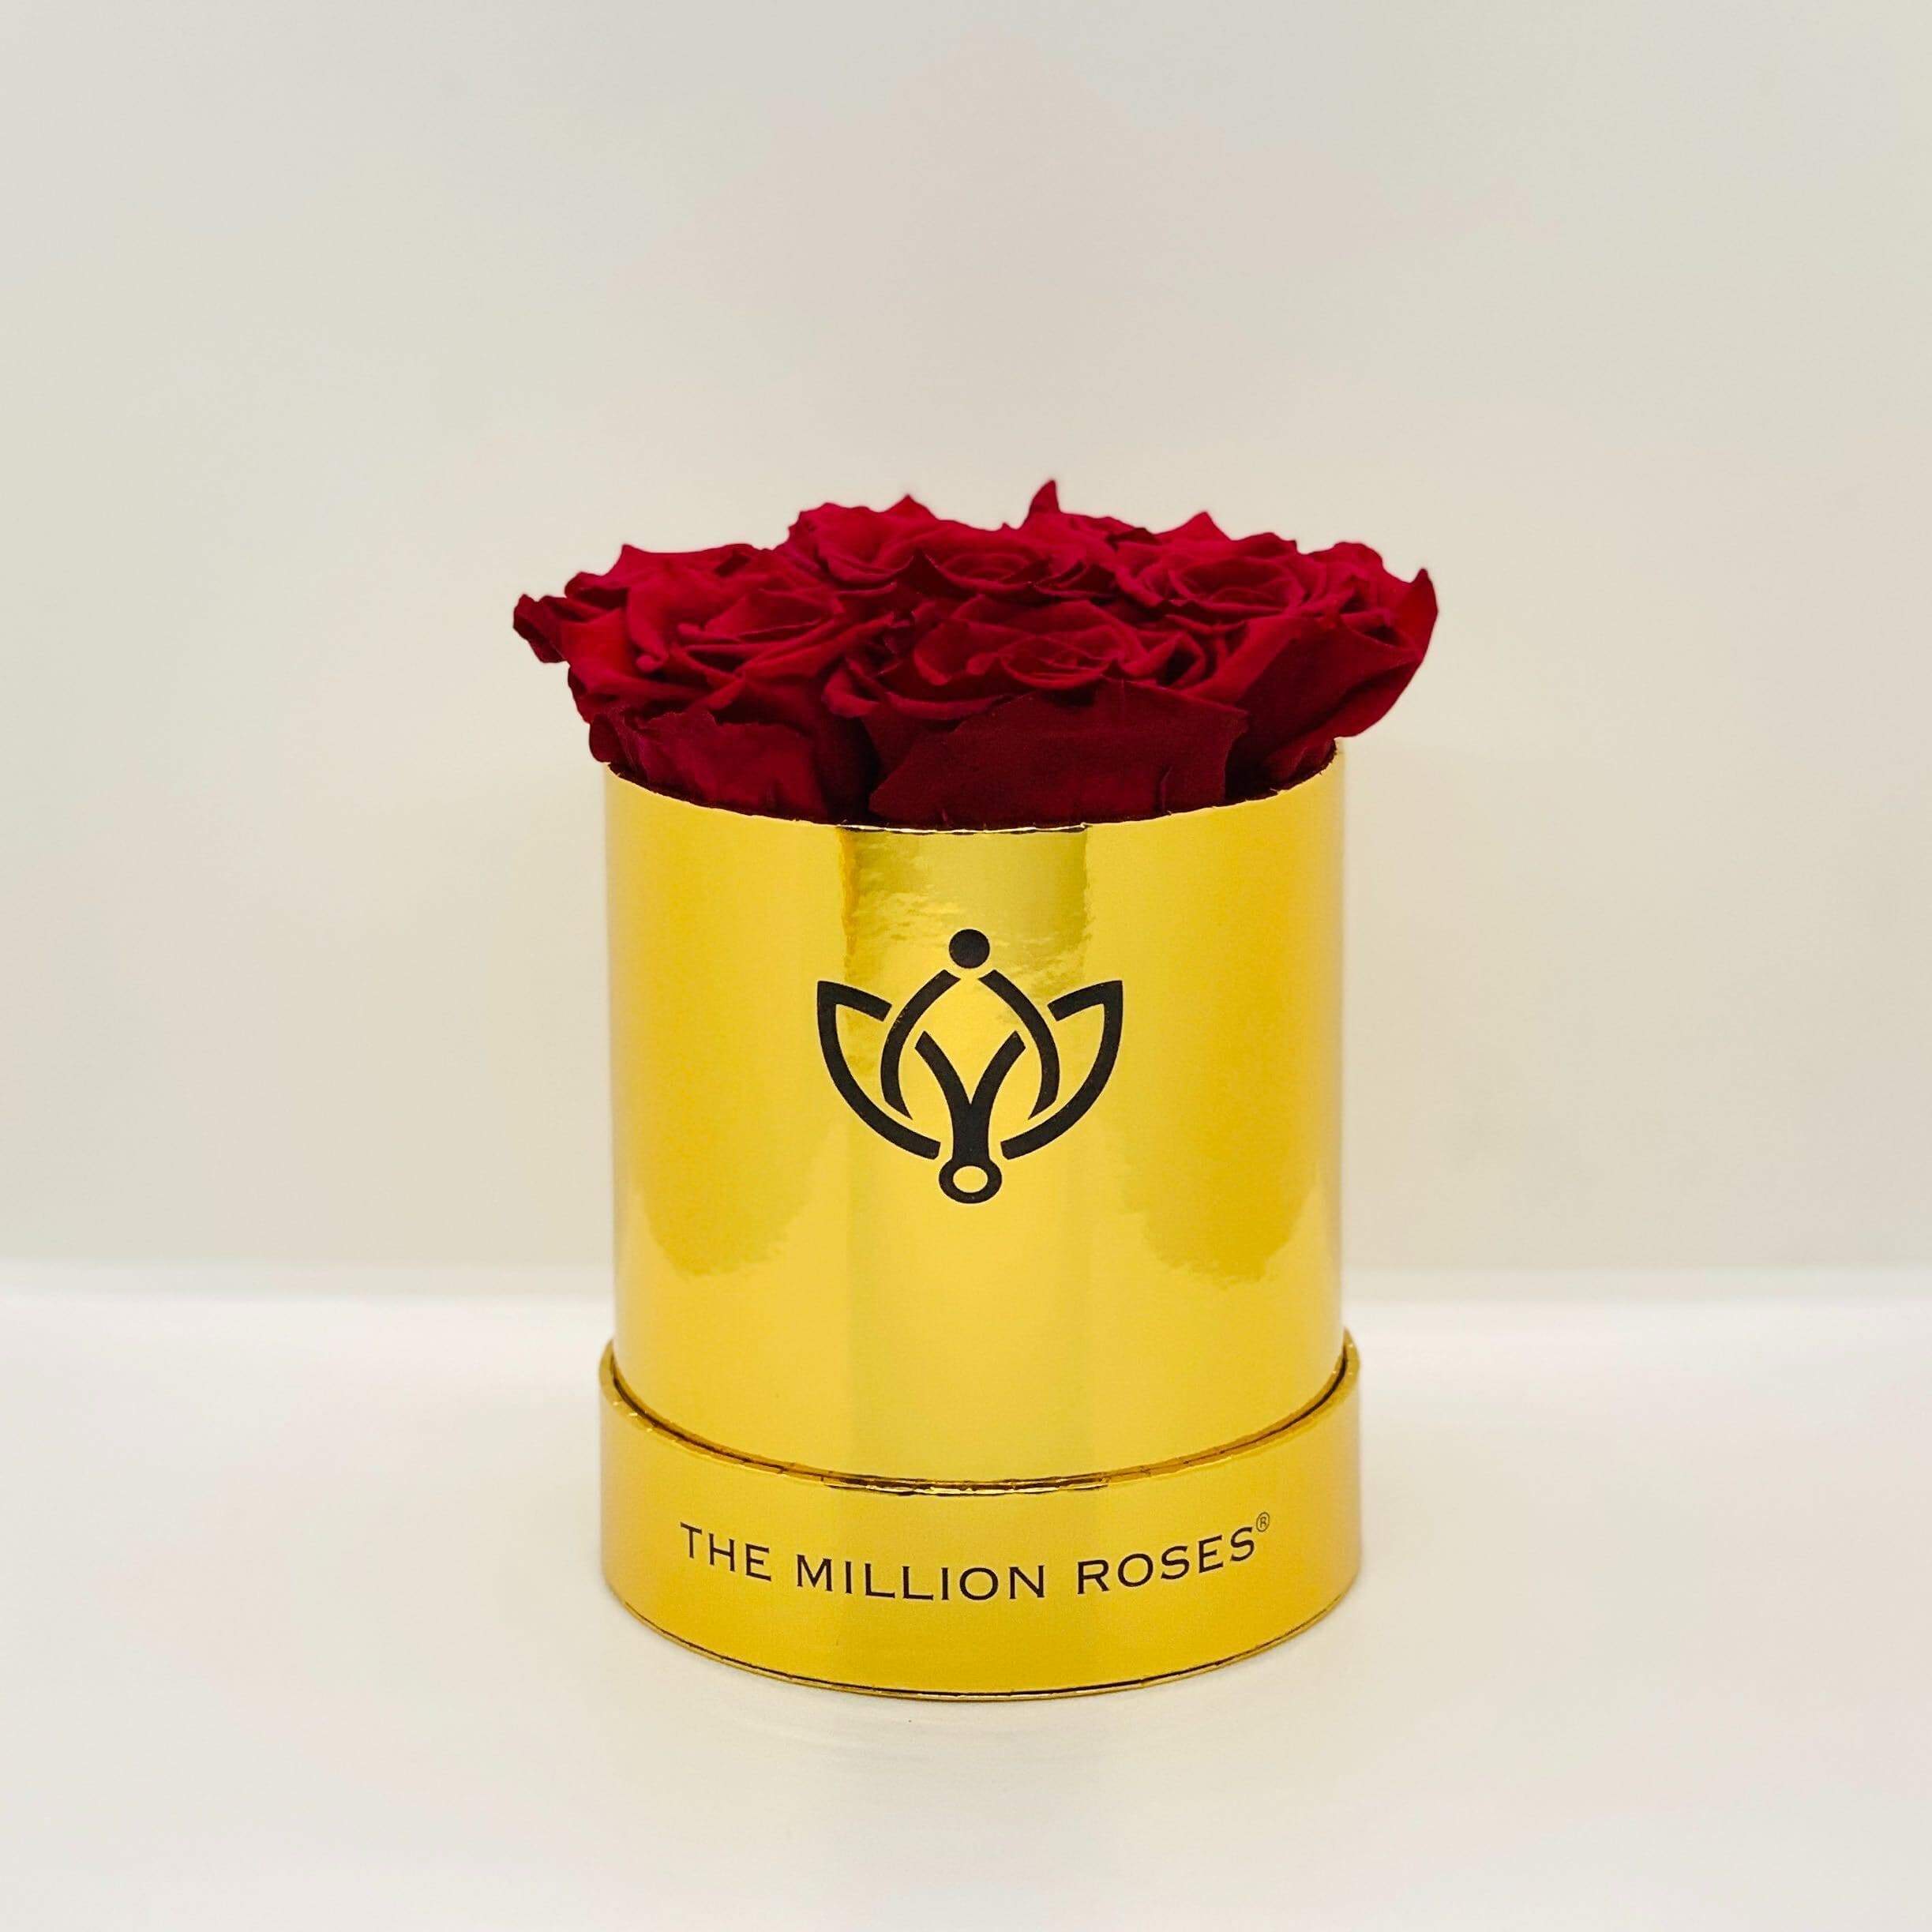 Basic Mirror Gold Box | Burgundy Roses - The Million Roses